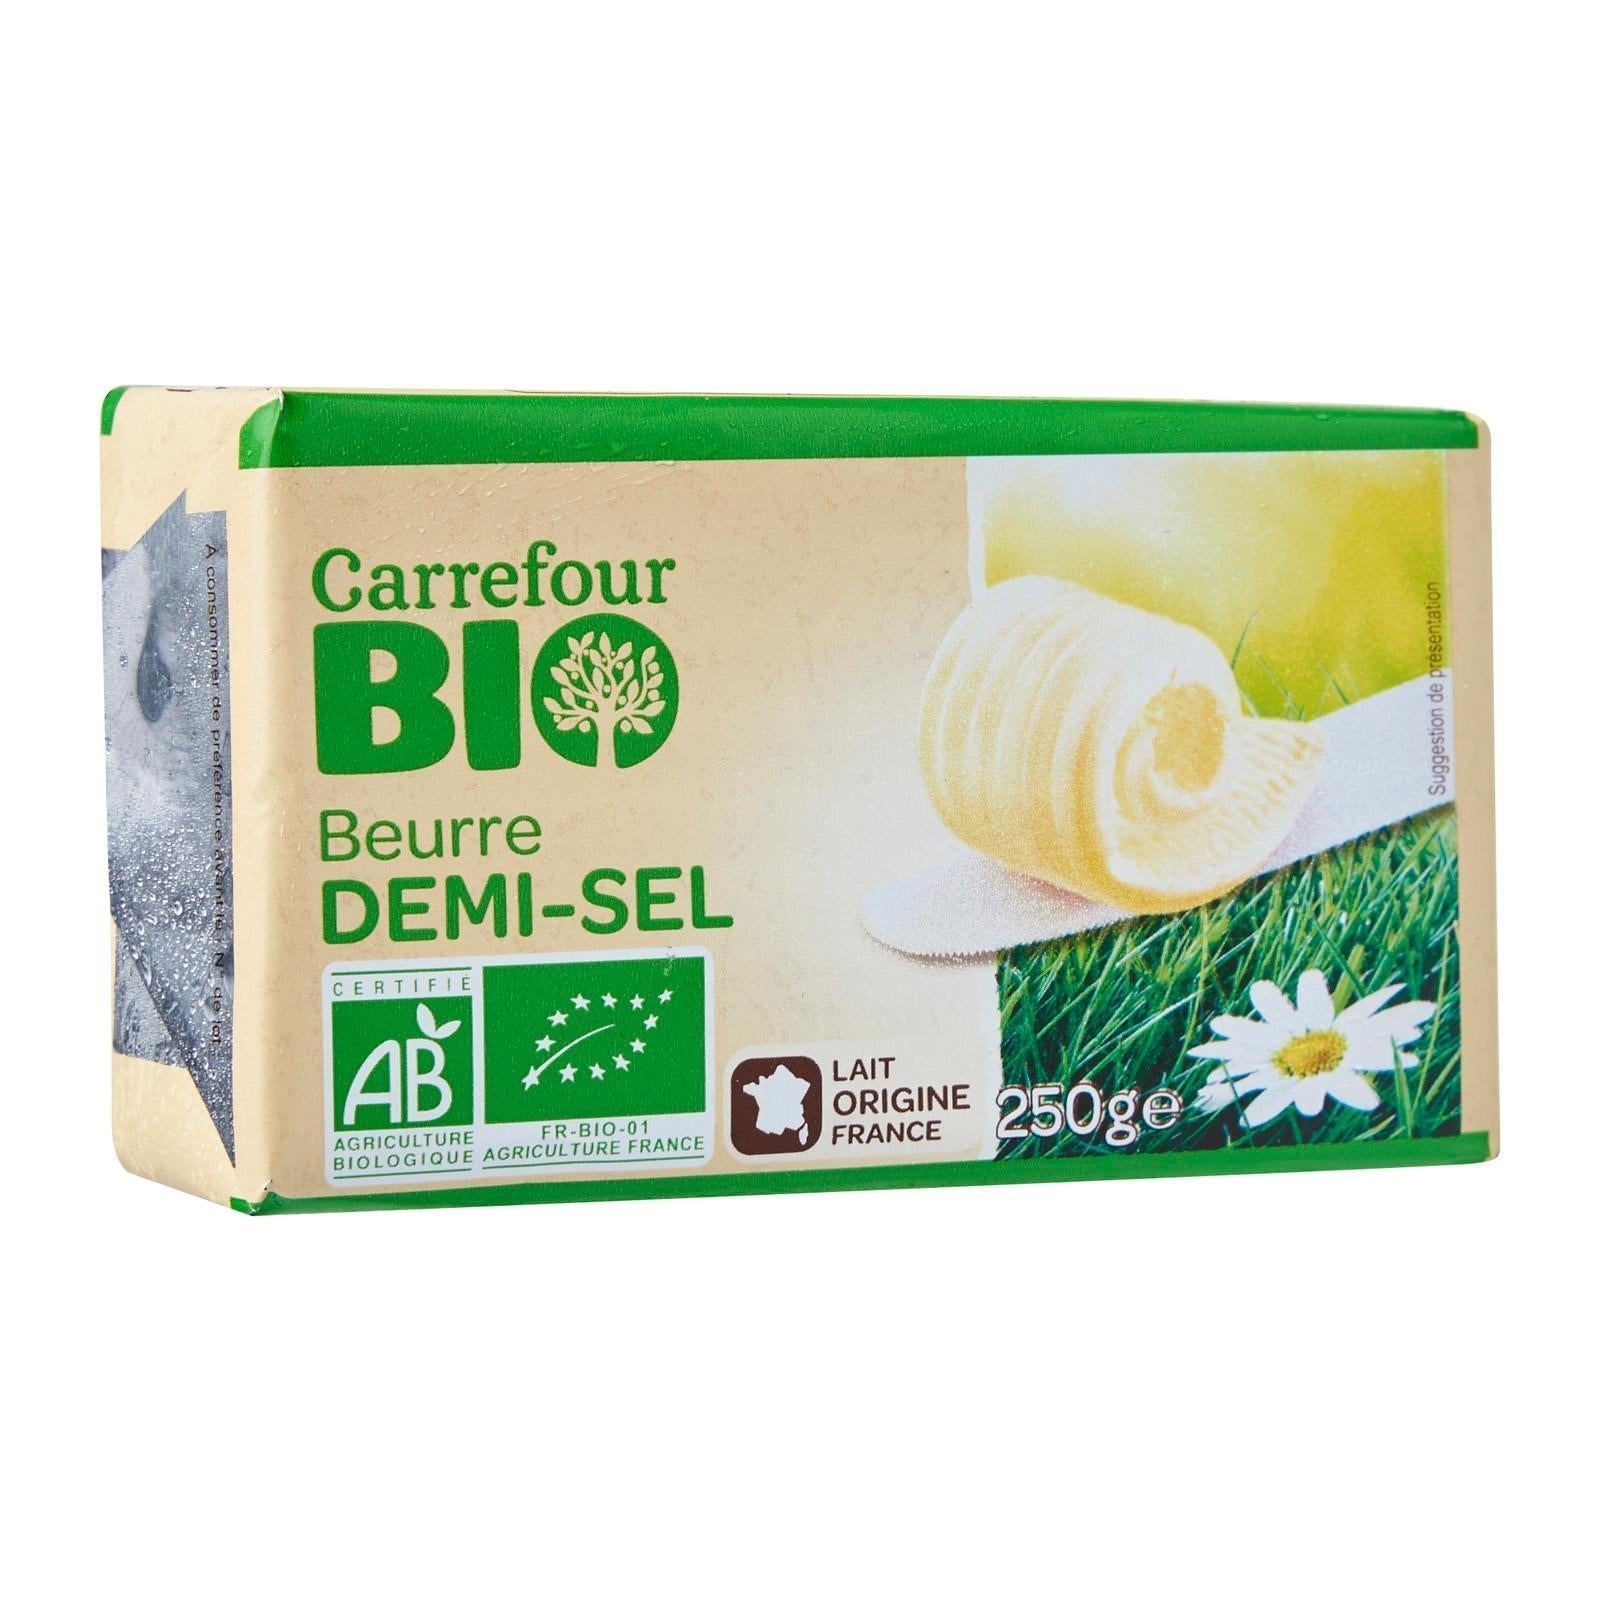 stm>Butter, Salted, Carrefour 7oz, 250g